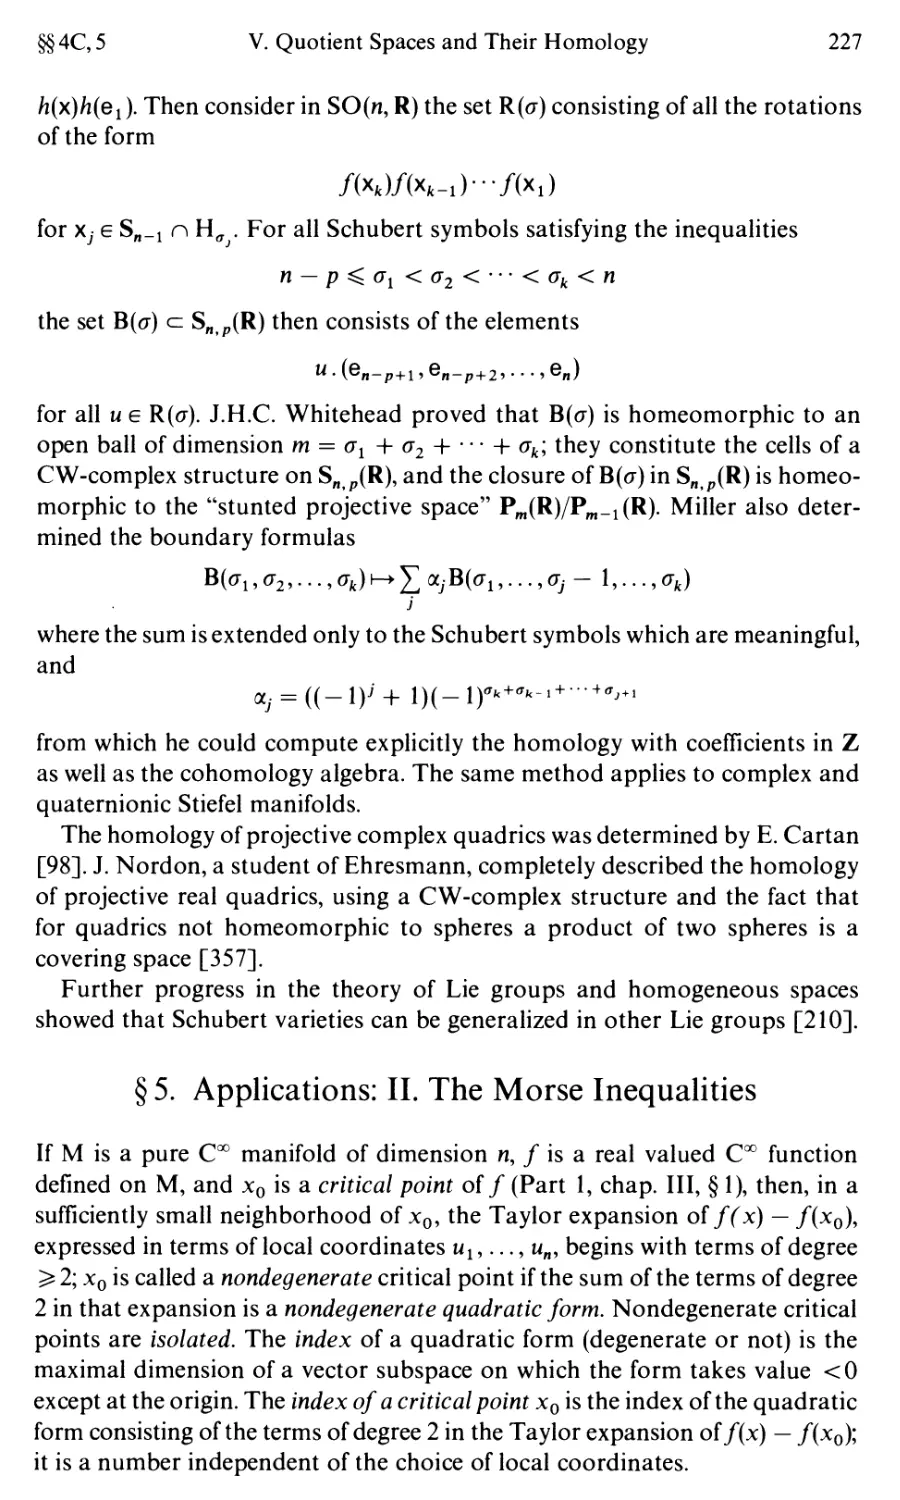 §5. Applications: II. The Morse Inequalities